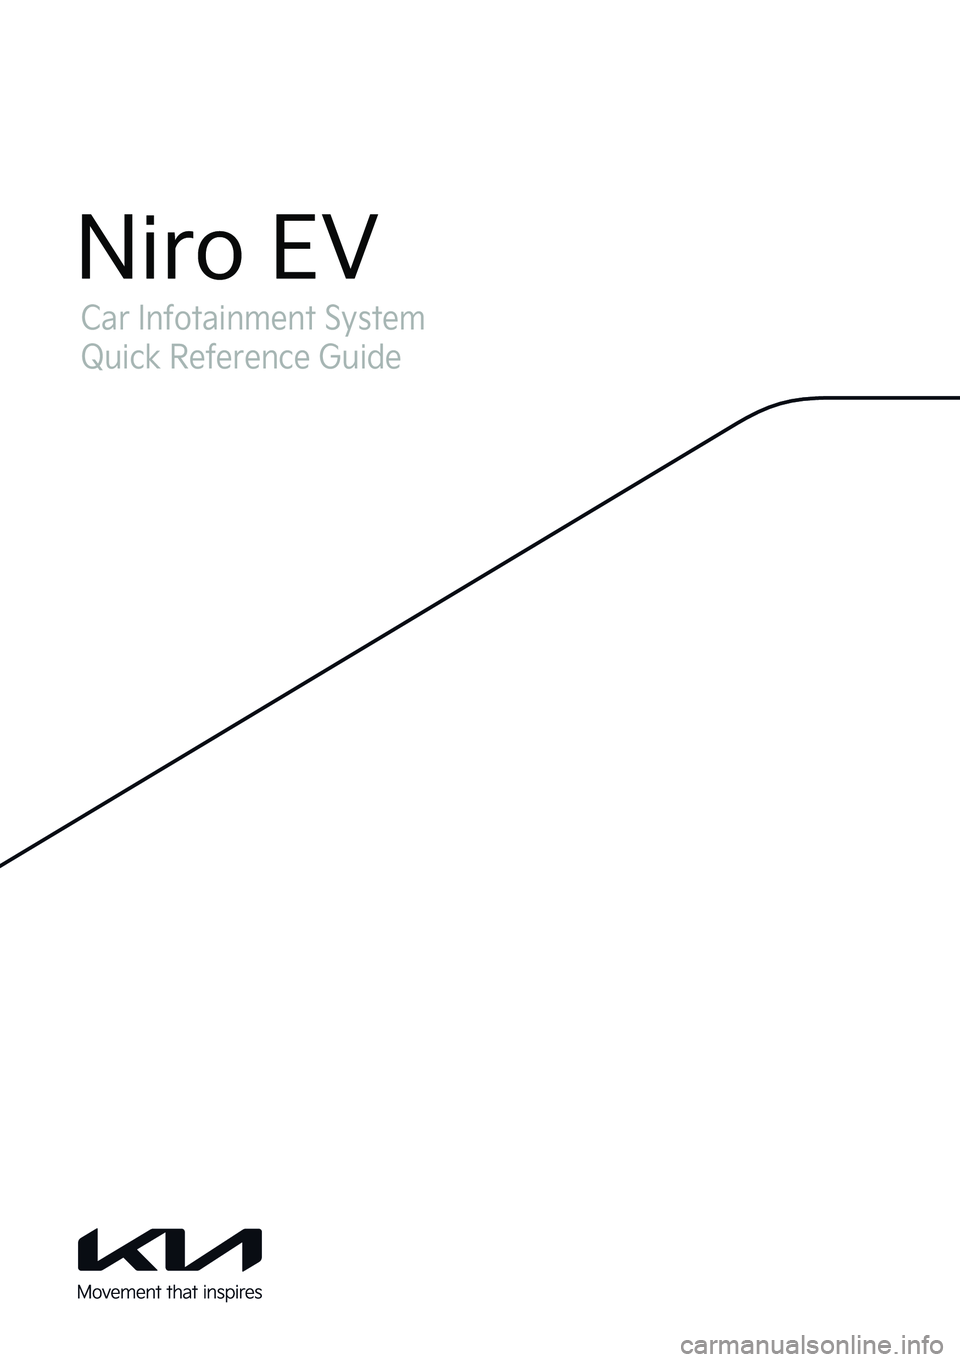 KIA NIRO EV 2023  Navigation System Quick Reference Guide Car Infotainment System
Quick Reference Guide
Niro EV  